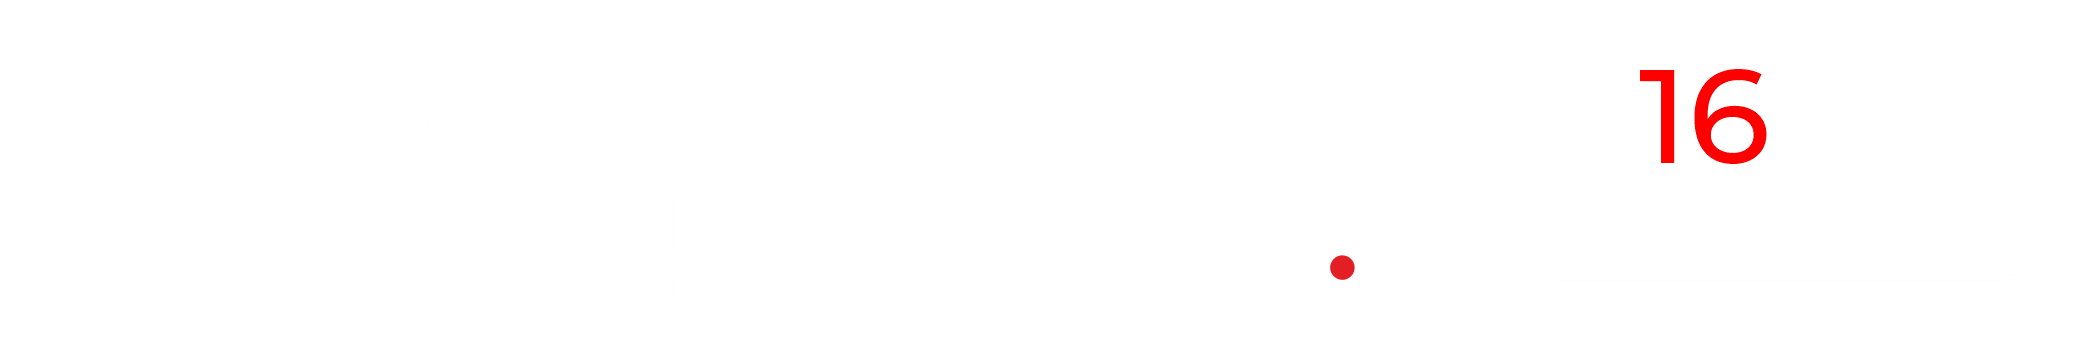 SEBprojekt strony internetowe Opole